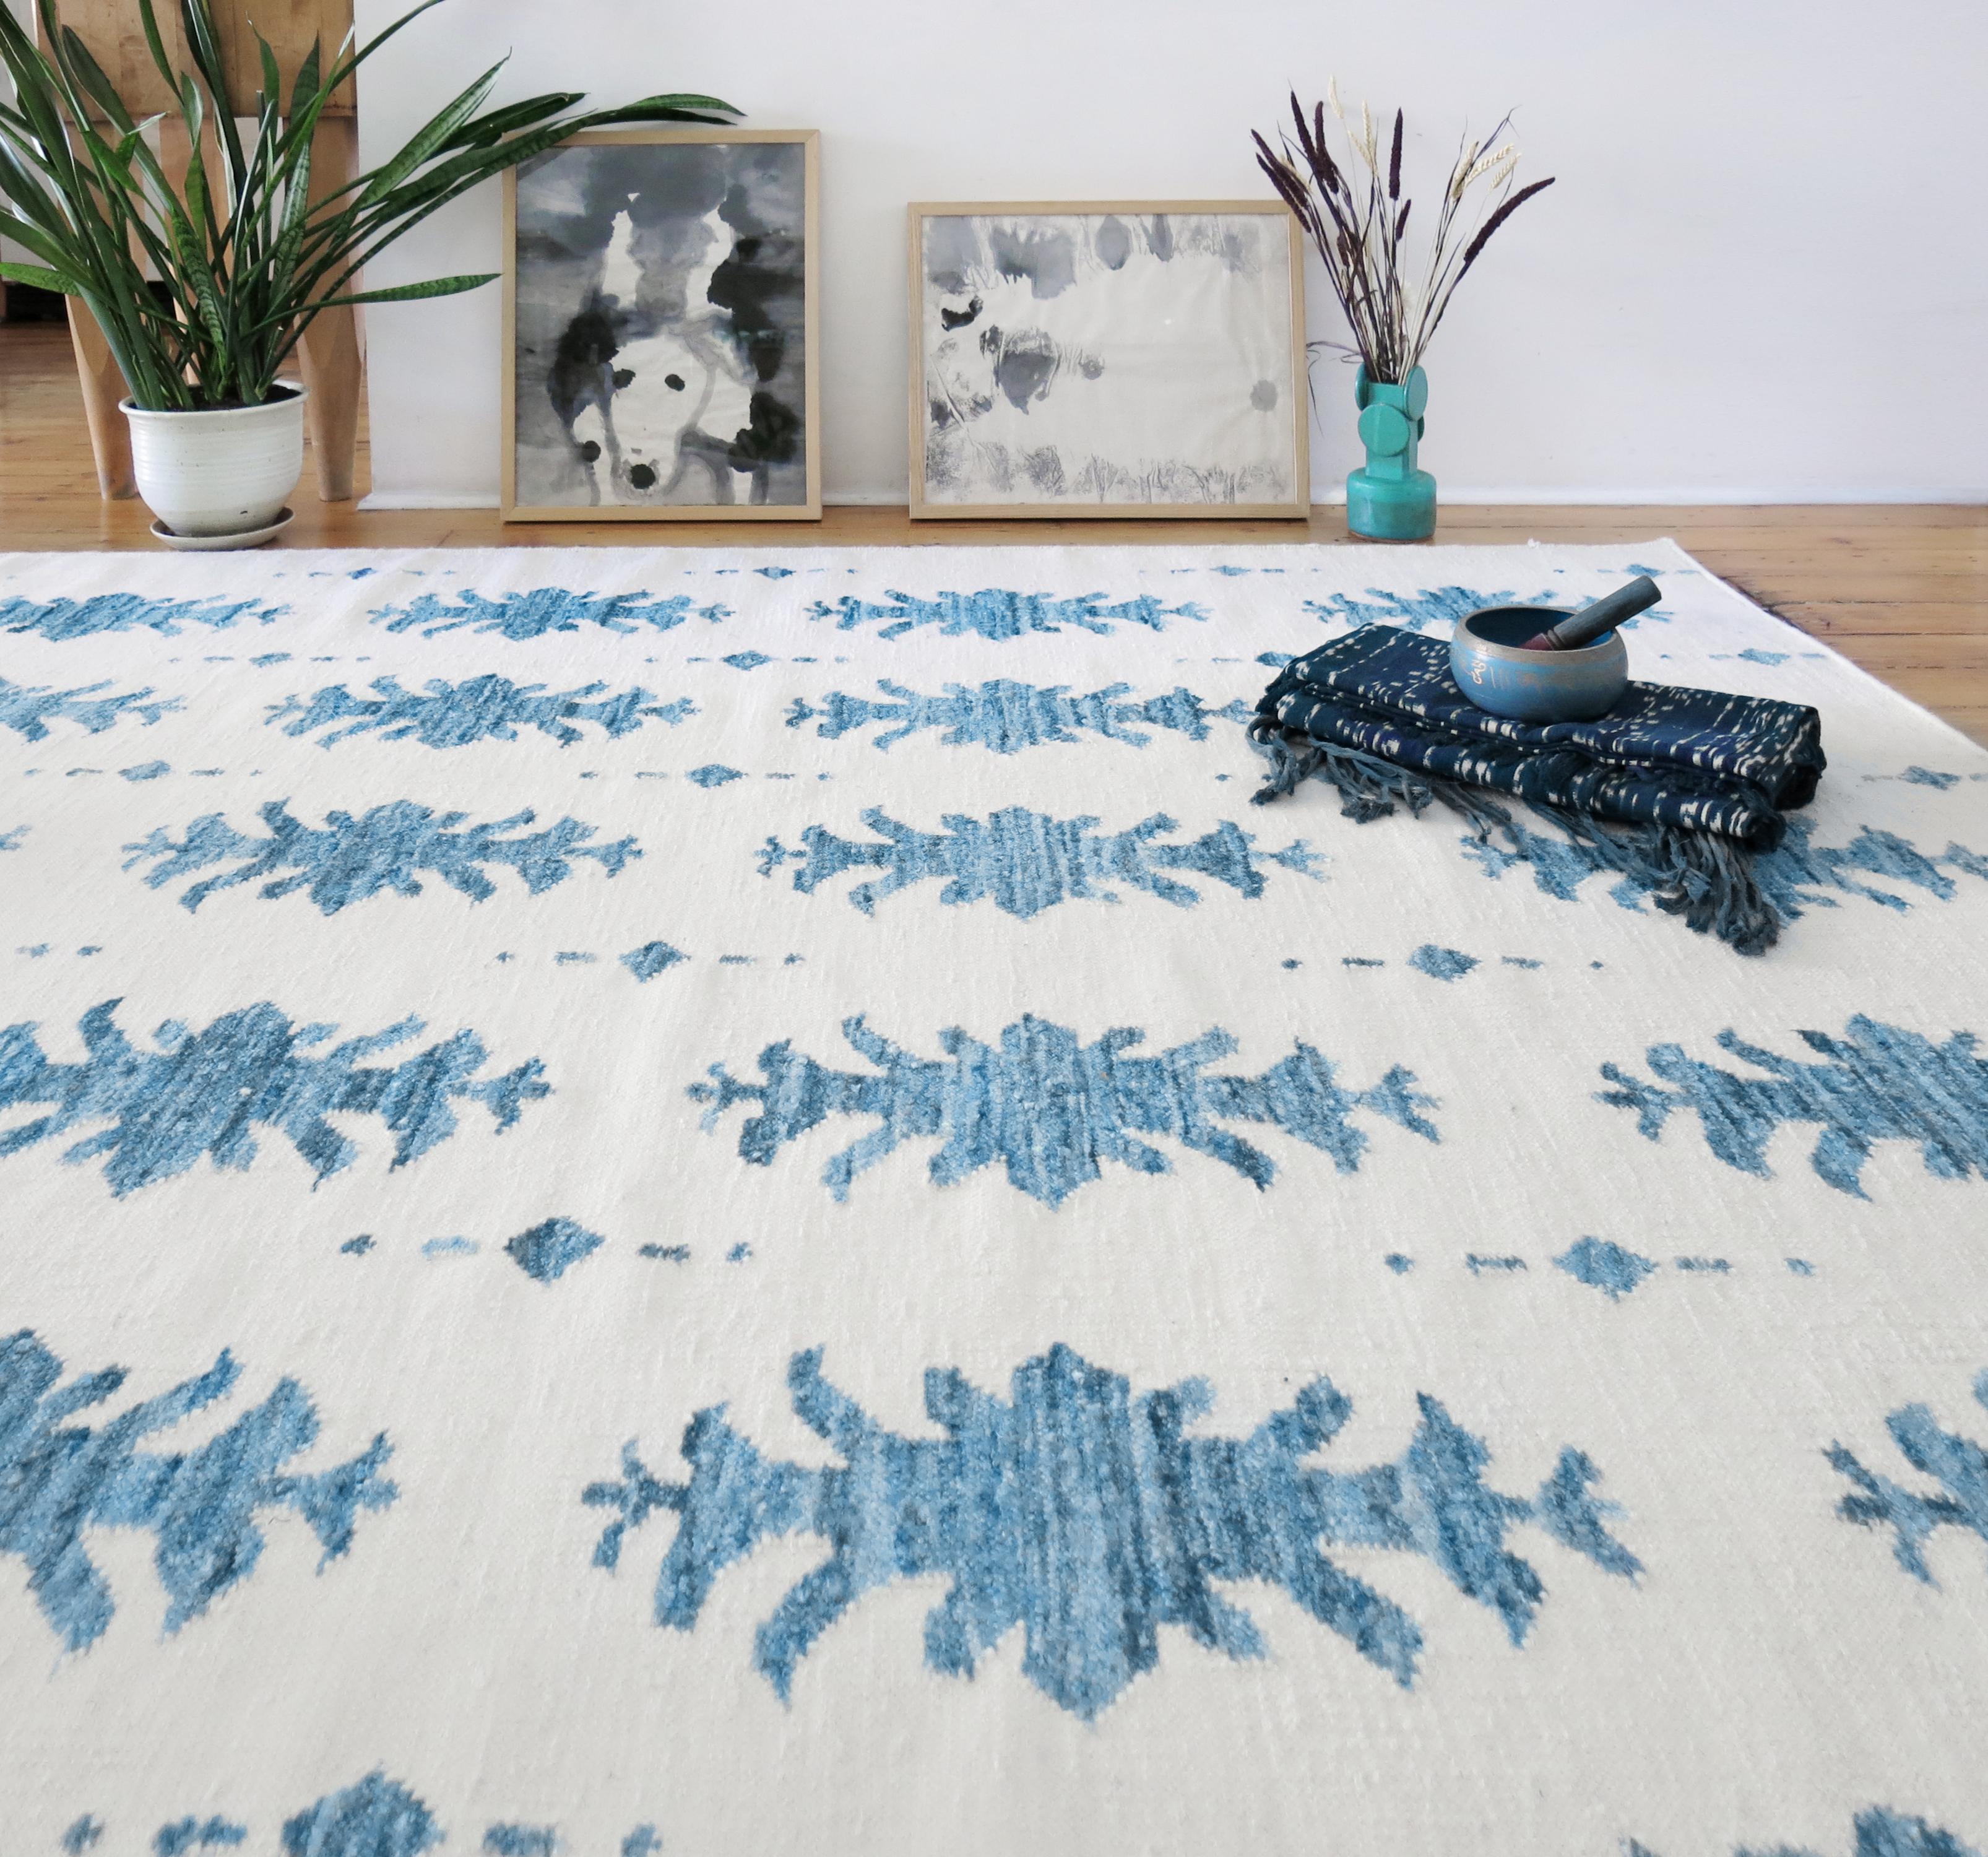 Rug Pattern: Areca Palms - Indigo
Material: Bamboo Silk Design/New Zealand Wool Background
Quality: Flat-weave, handwoven 
Size: 6'-0